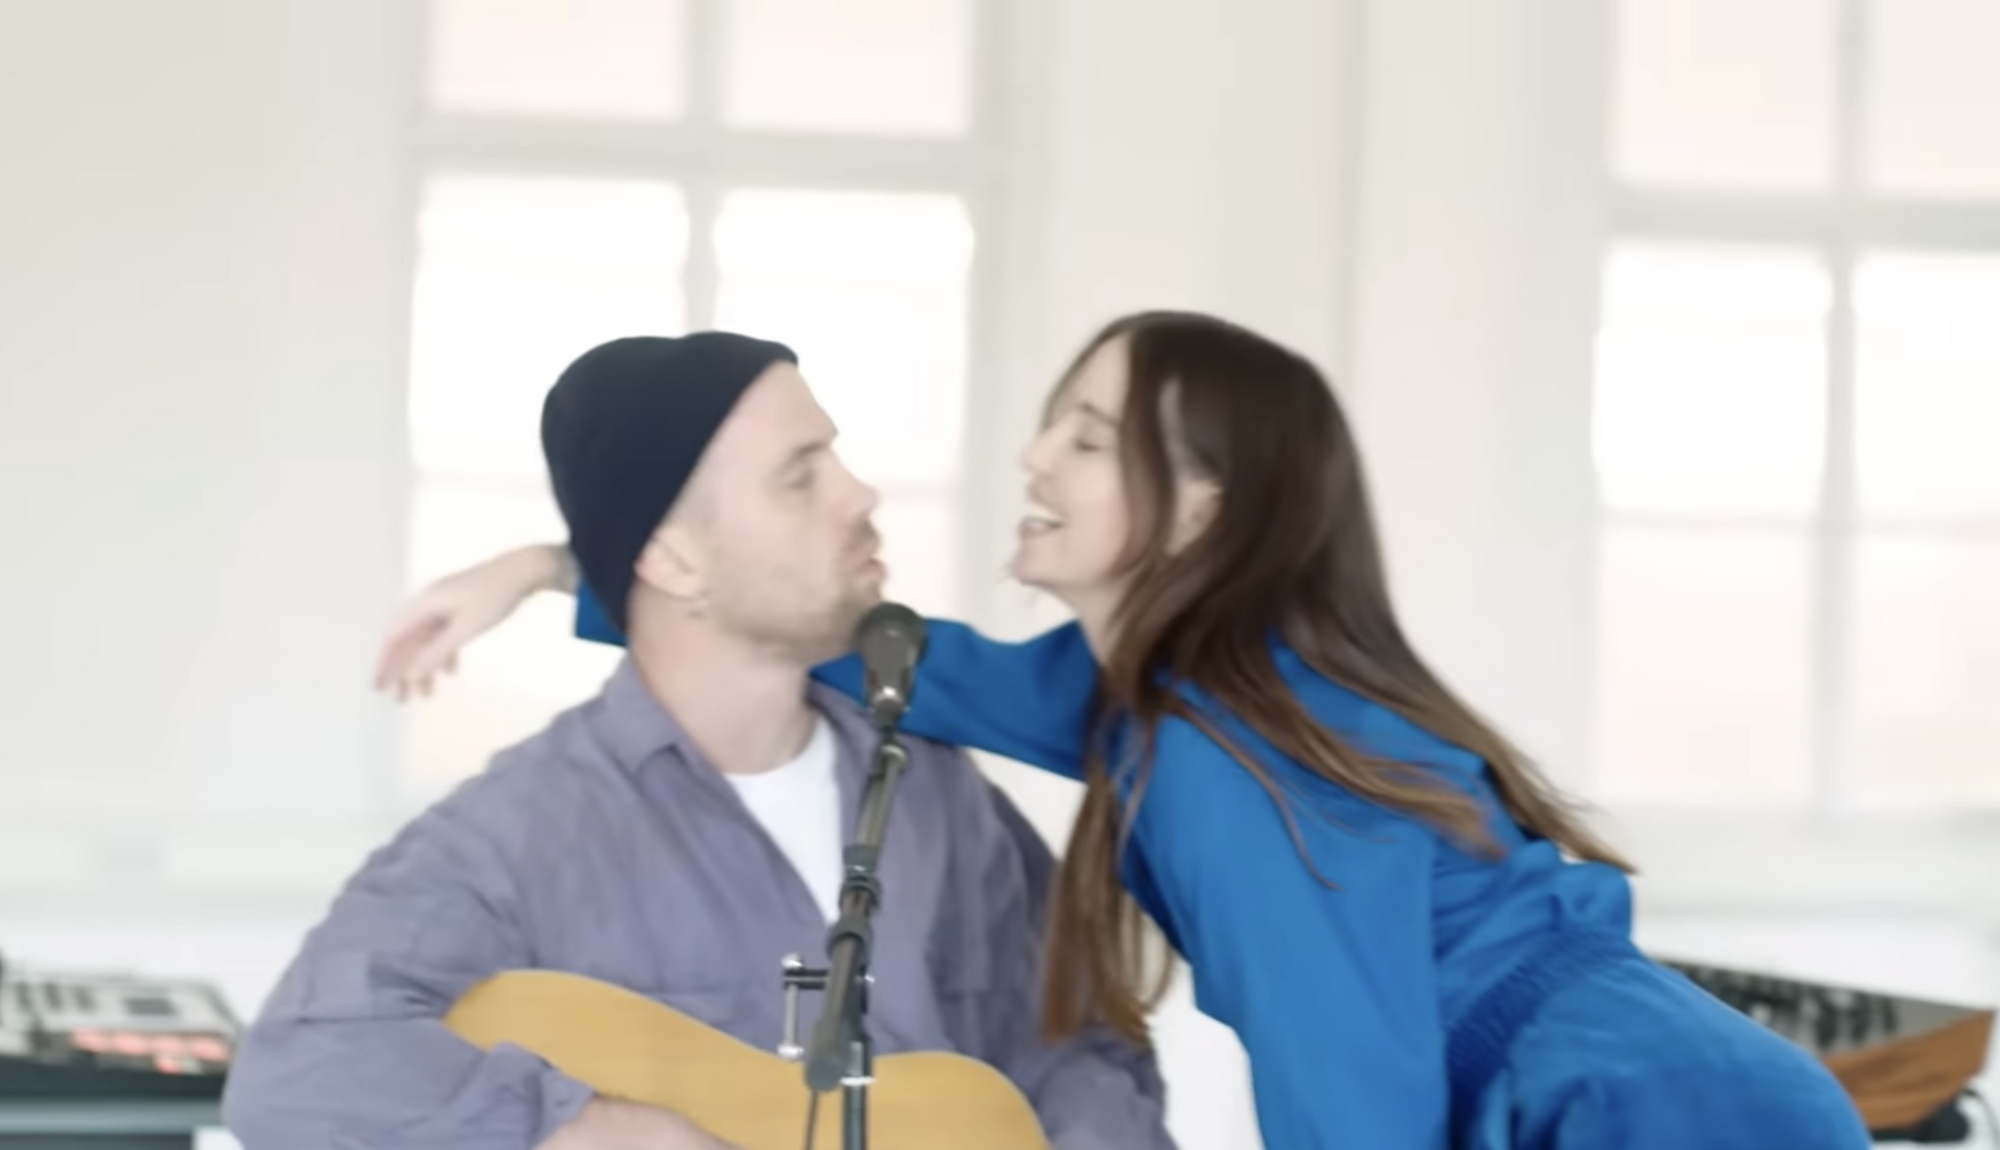 Дорофеева и ее новый бойфренд Кацурин выпустили общую песню: "щоб не зійти з розуму, маємо бути разом"